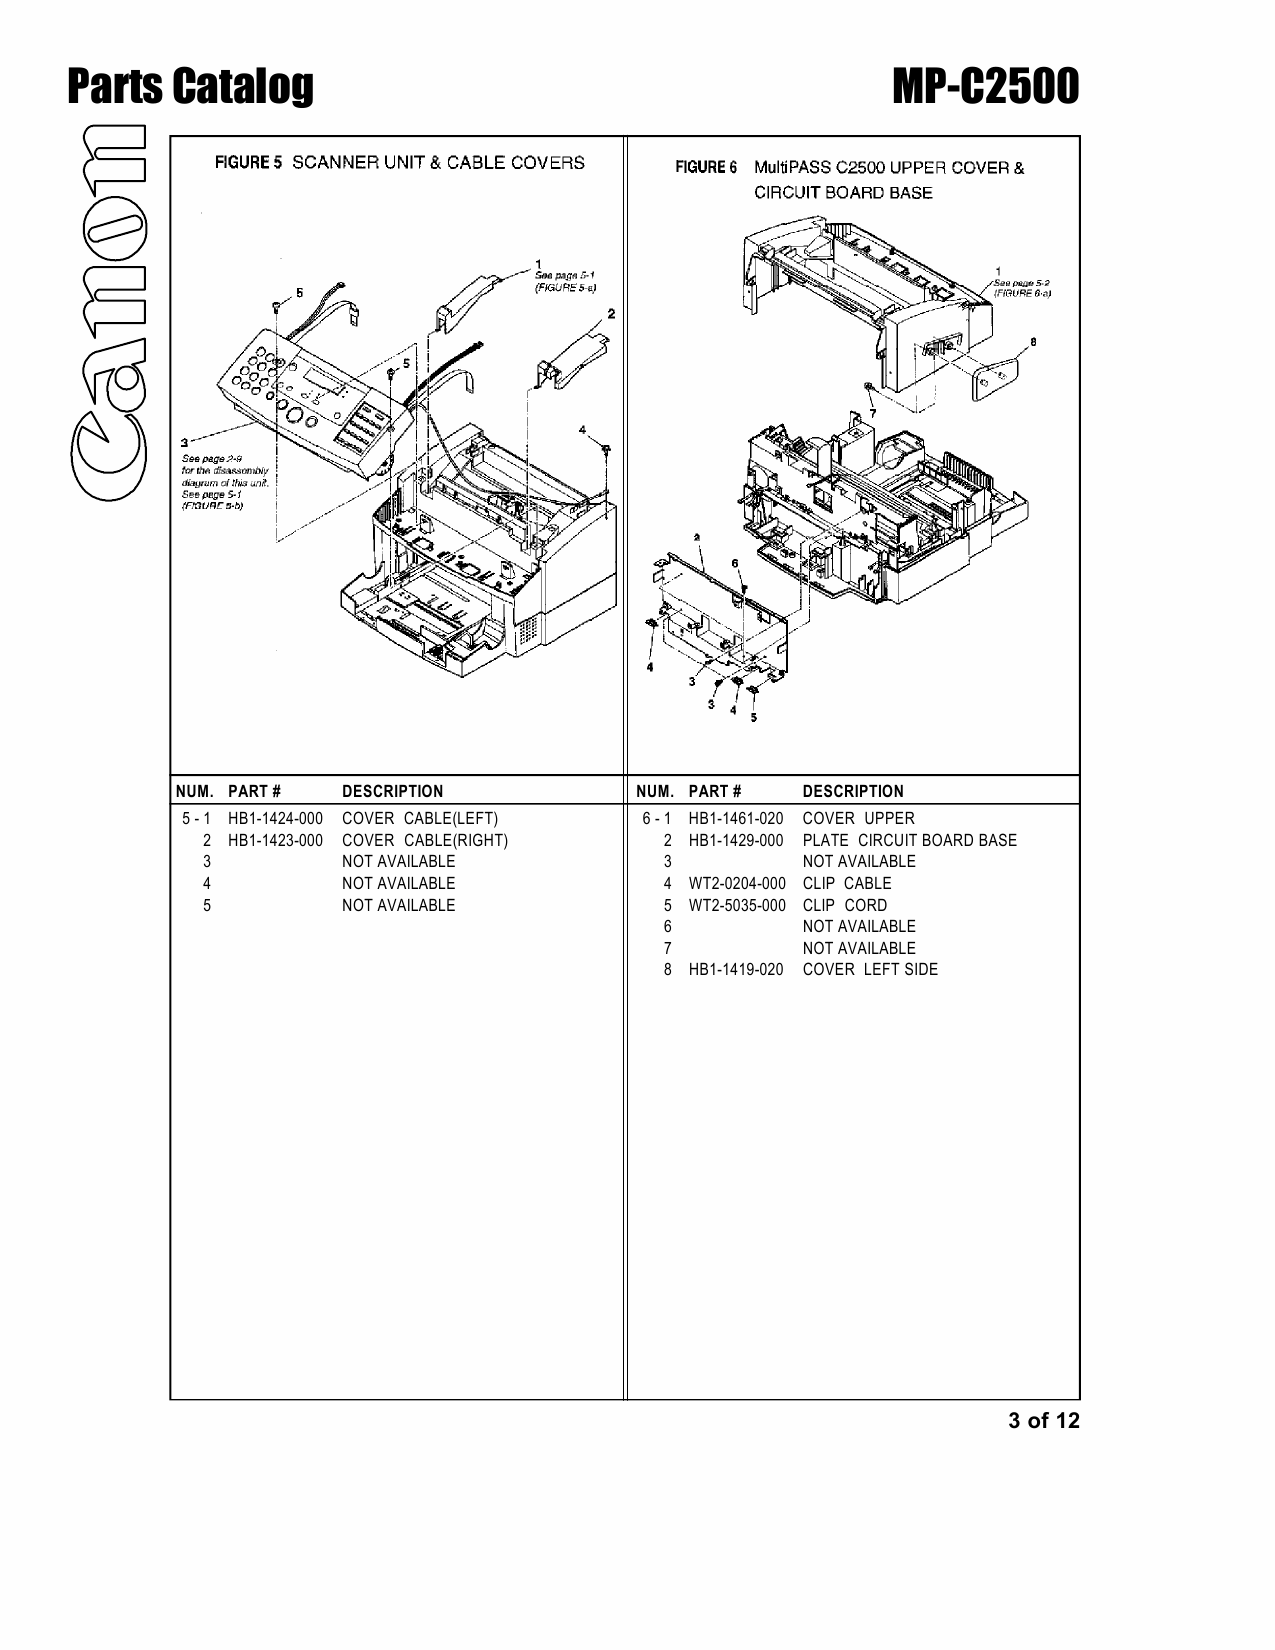 Canon MultiPASS MP-C2500 Parts Catalog Manual-3